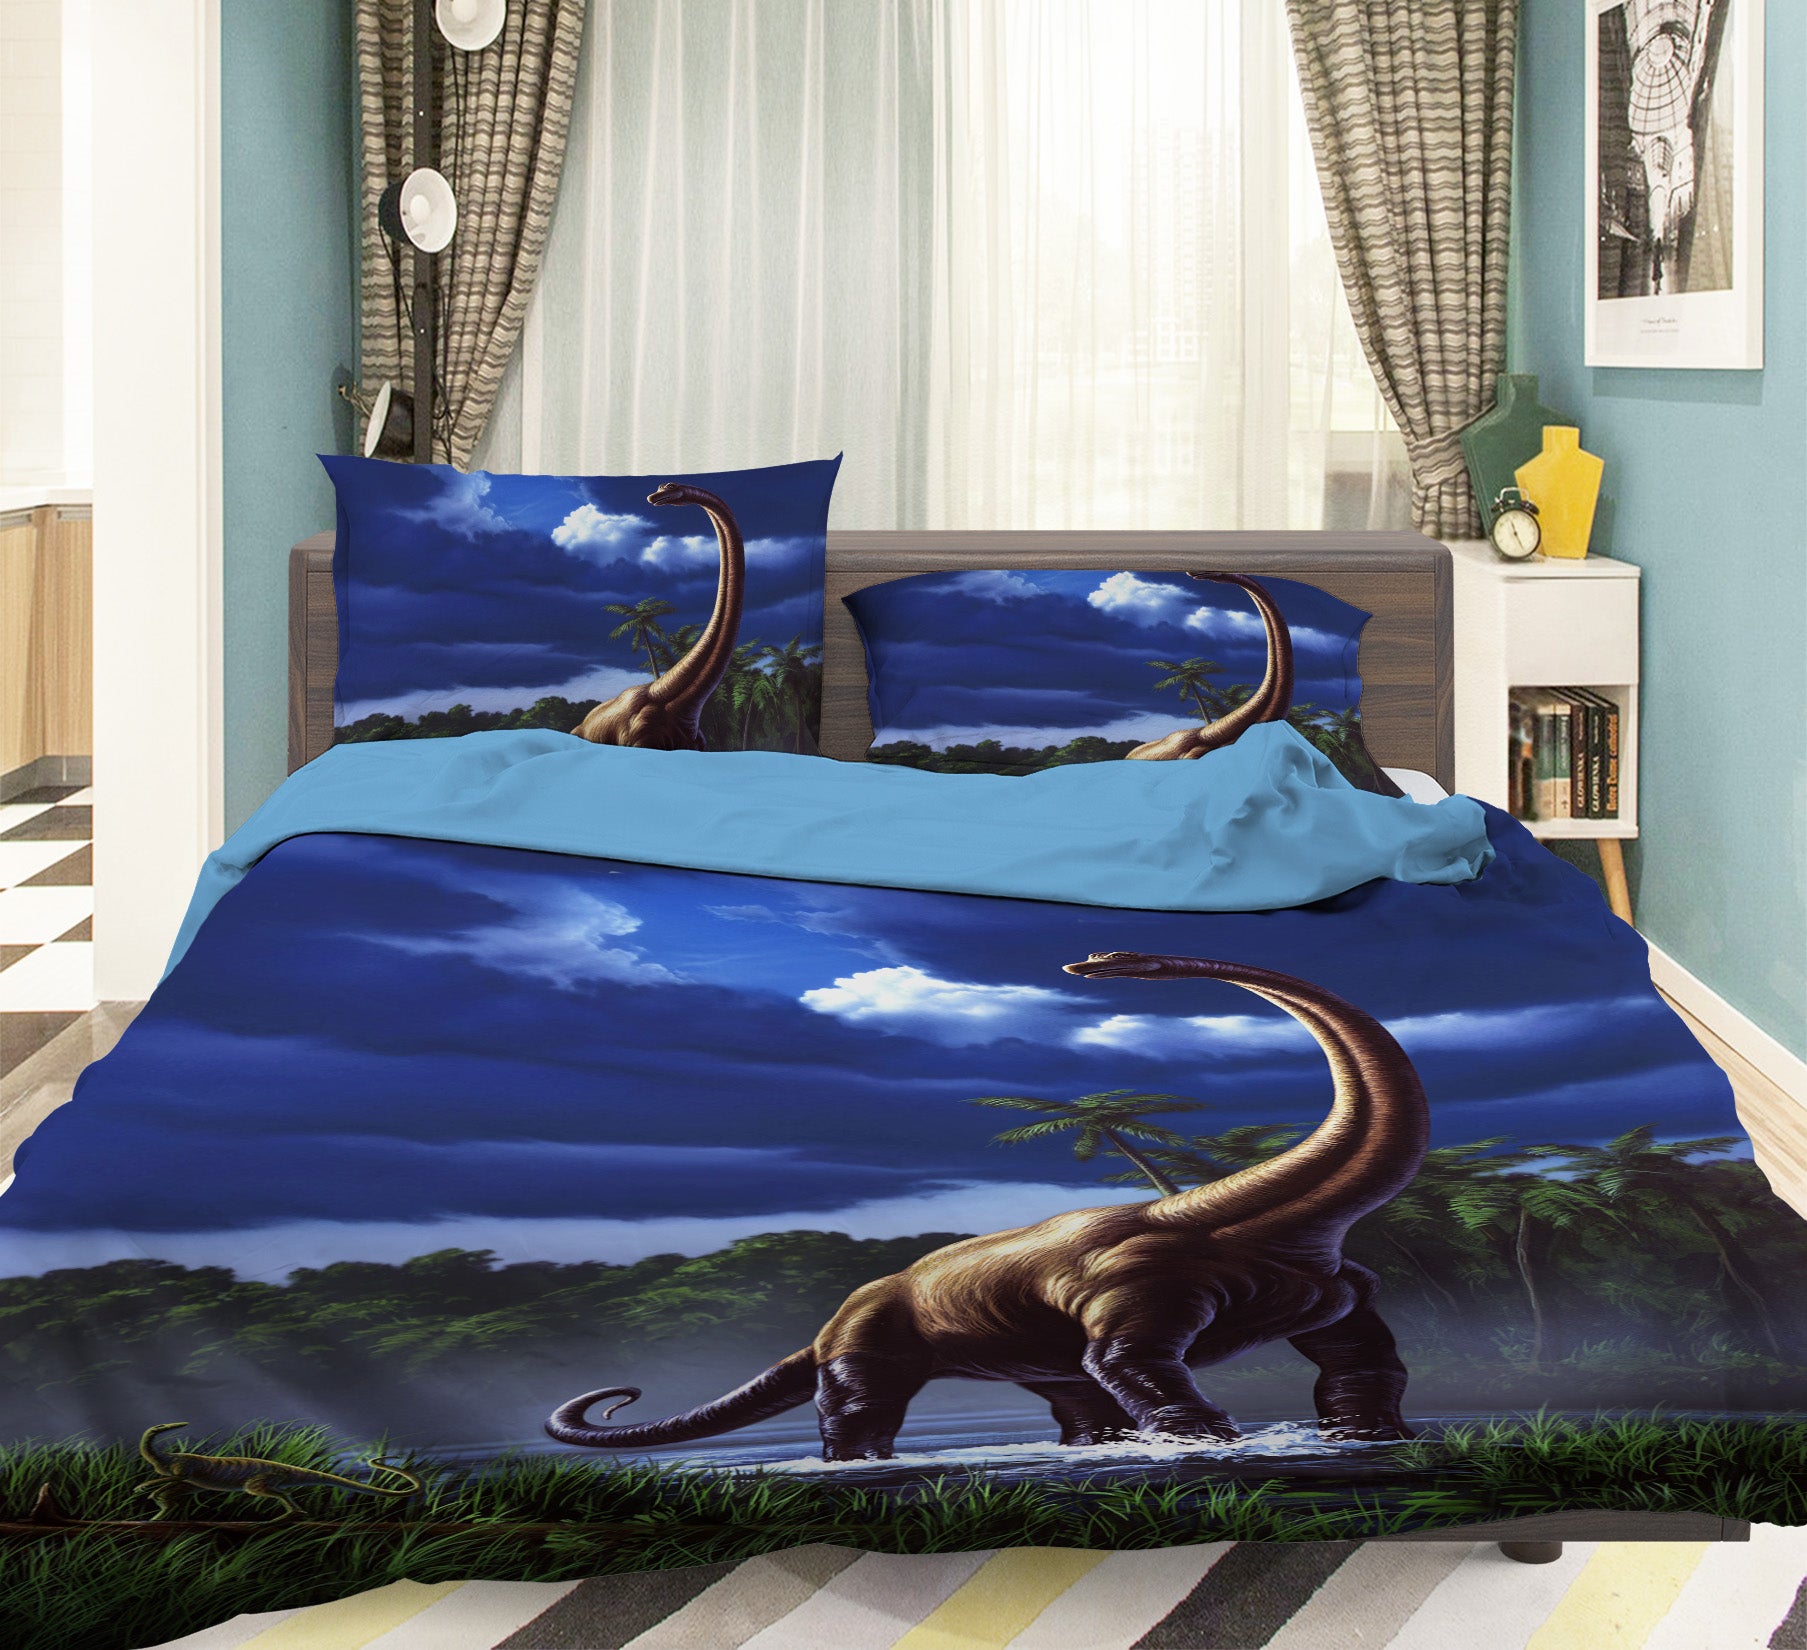 3D Brachiosaur 2113 Jerry LoFaro bedding Bed Pillowcases Quilt